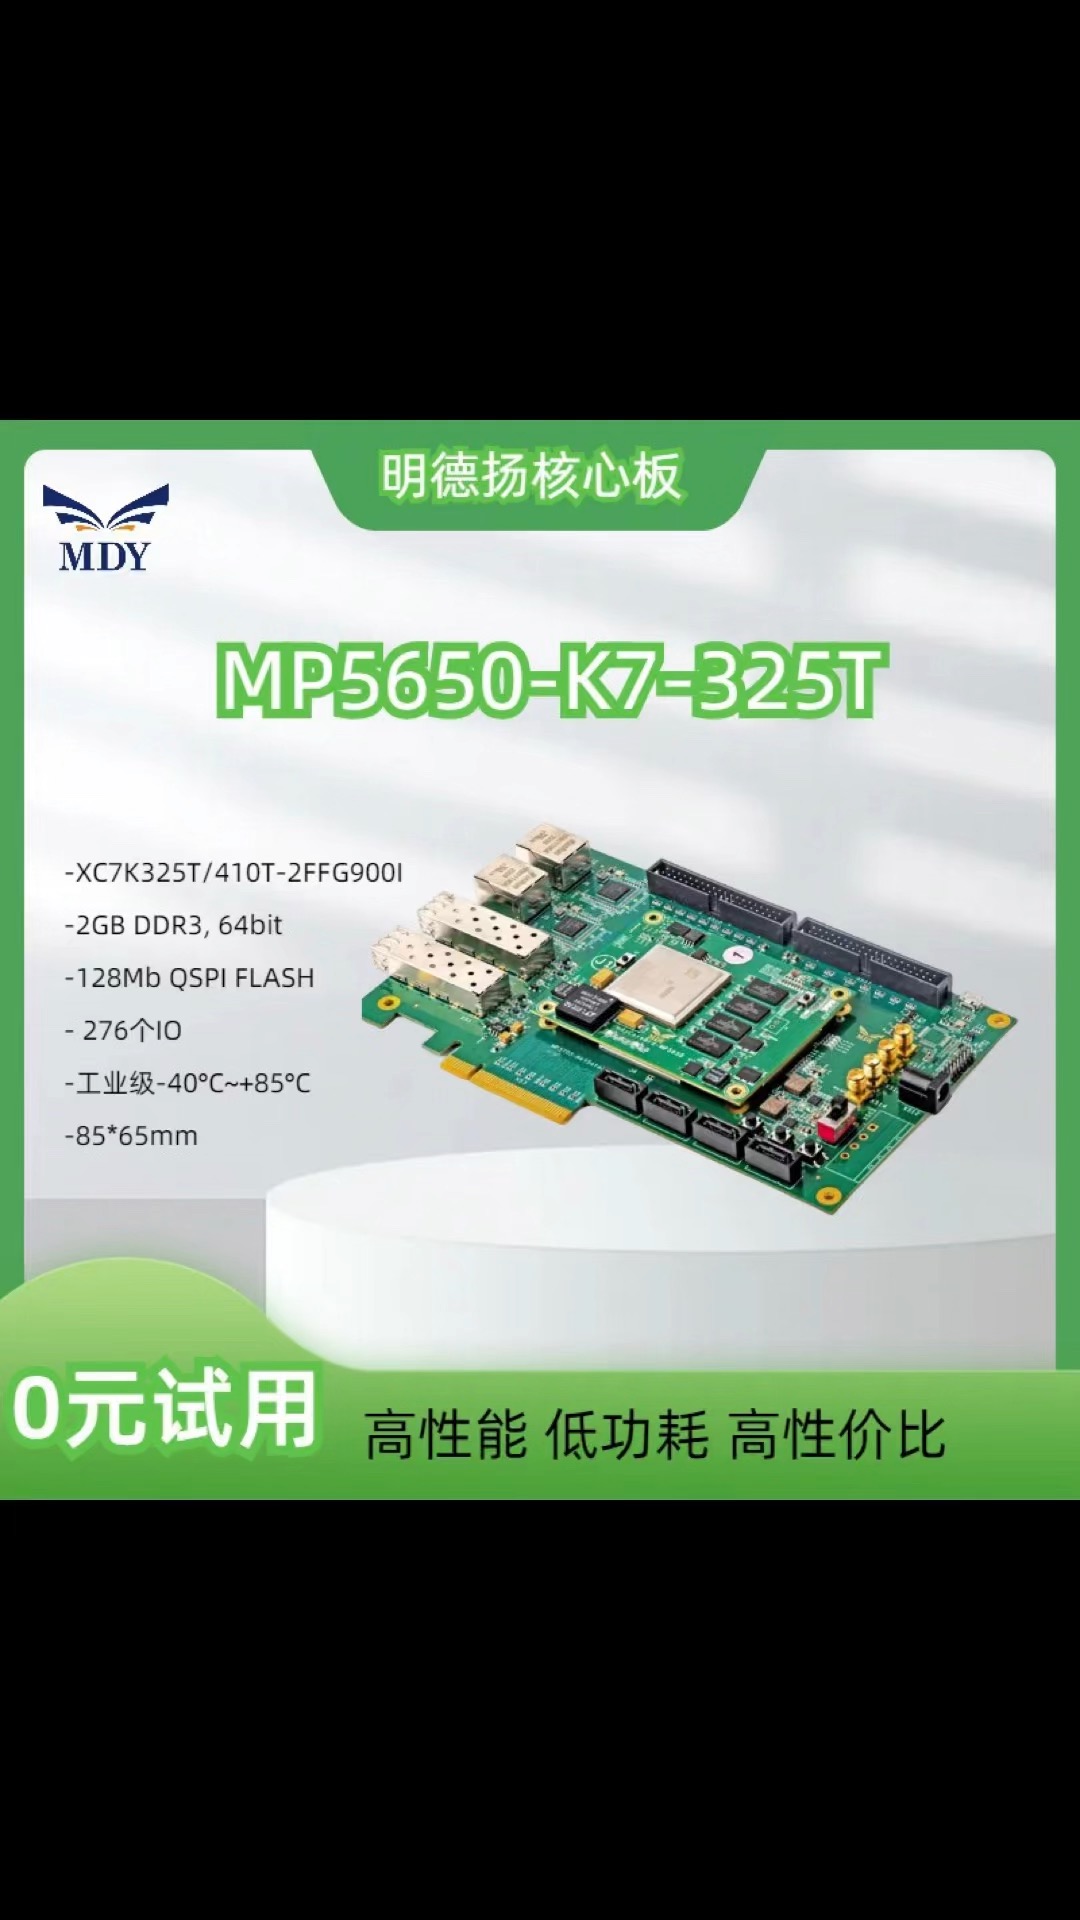 #fpga 明德扬MP5650-K7-325T核心板
-XC7K325T/410T-2FFG900I
-4GB